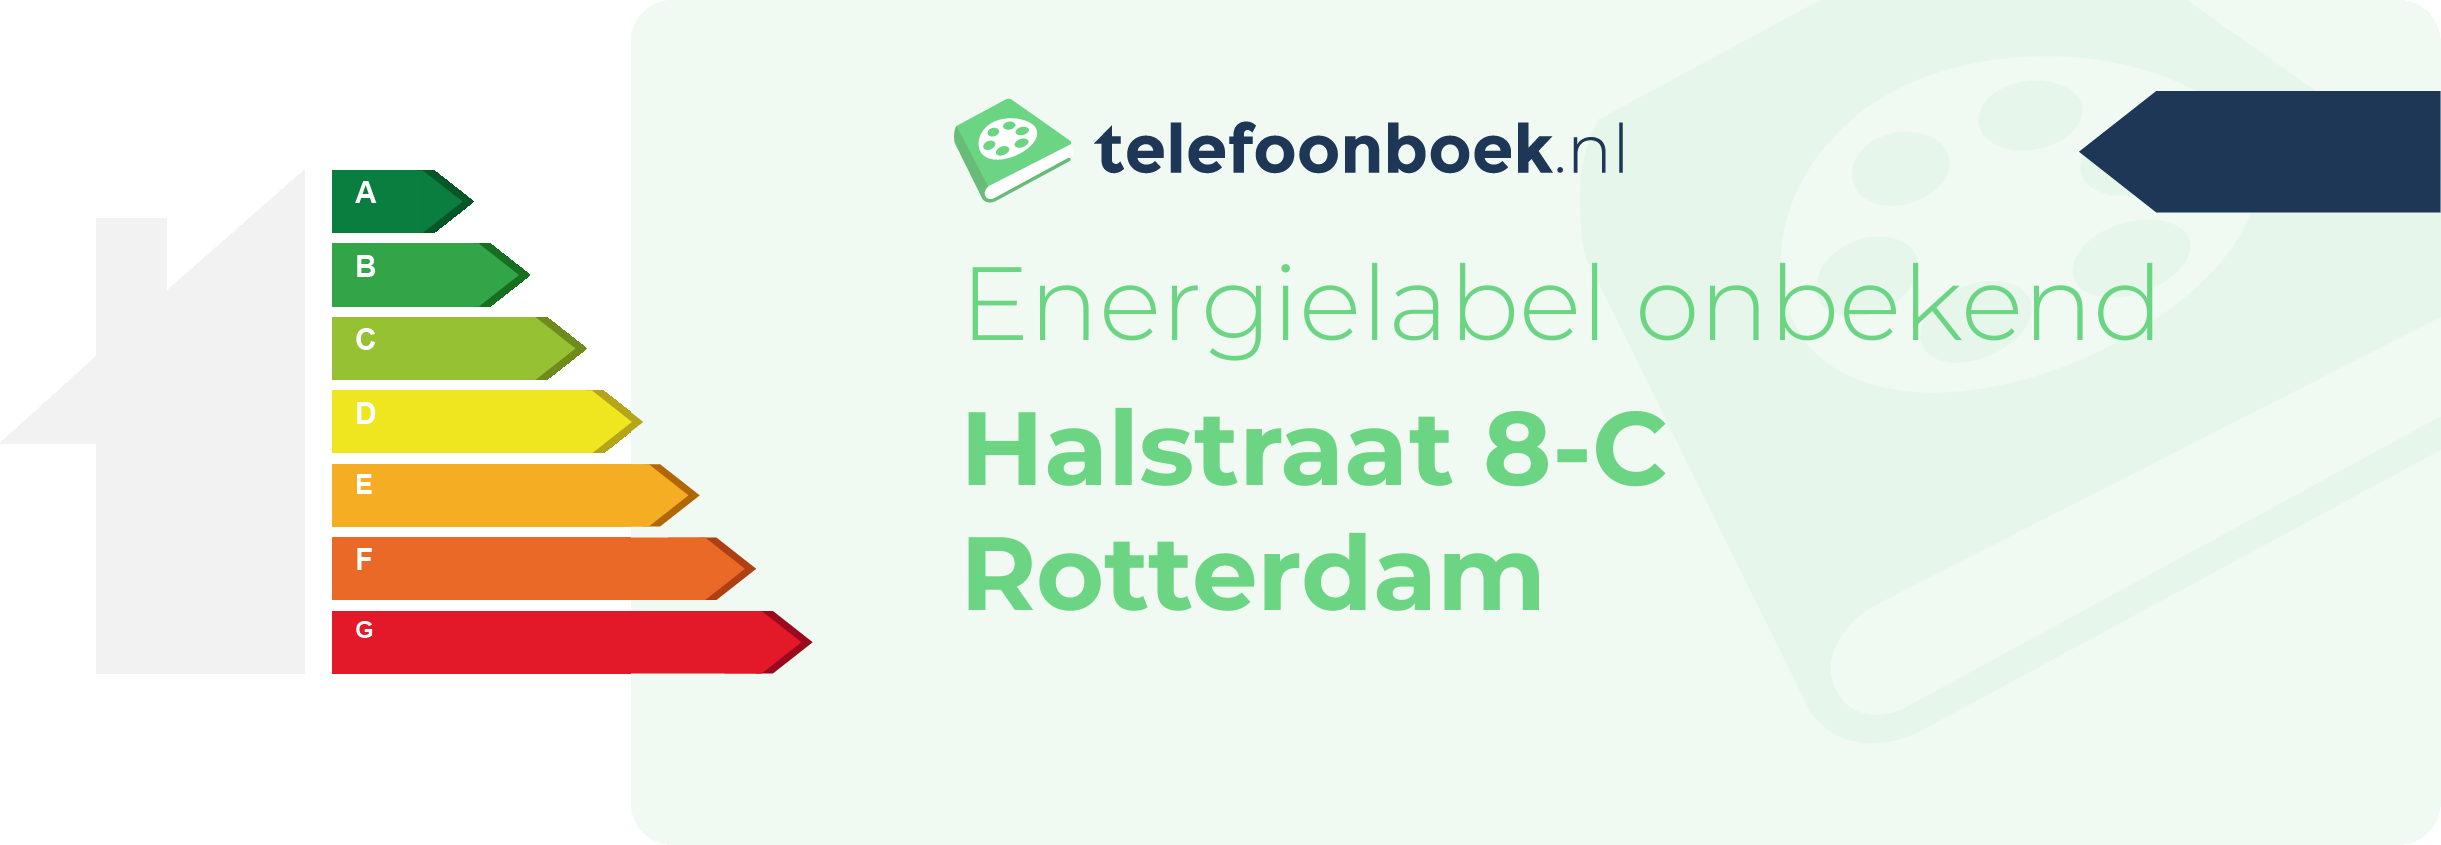 Energielabel Halstraat 8-C Rotterdam